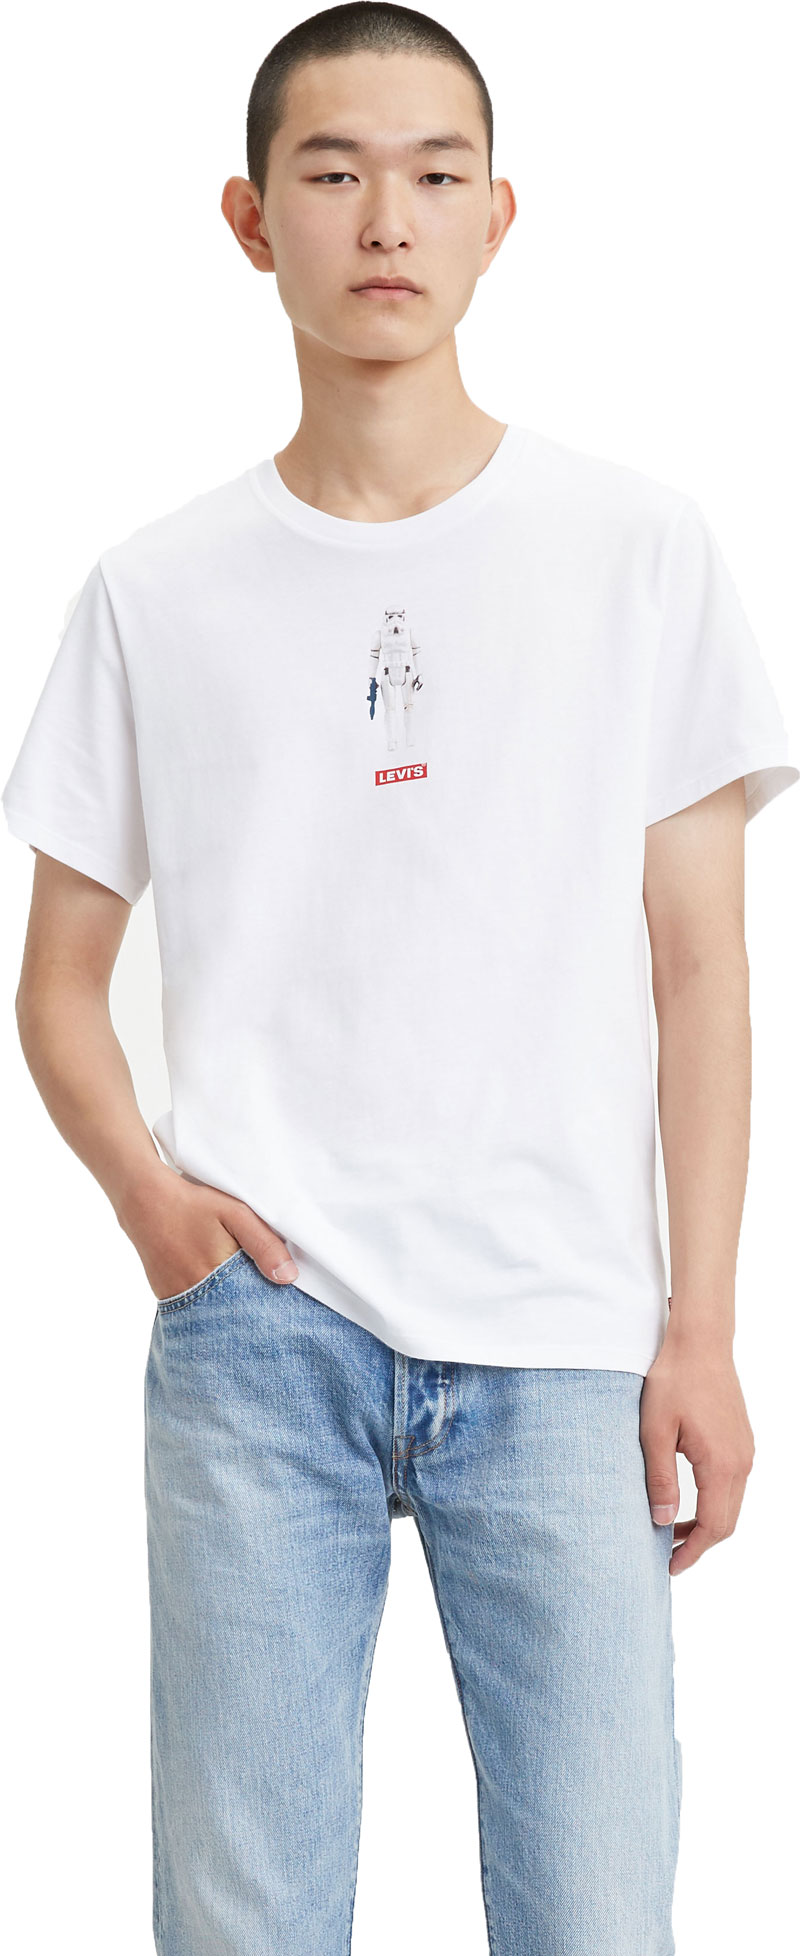 Men’s T-Shirt